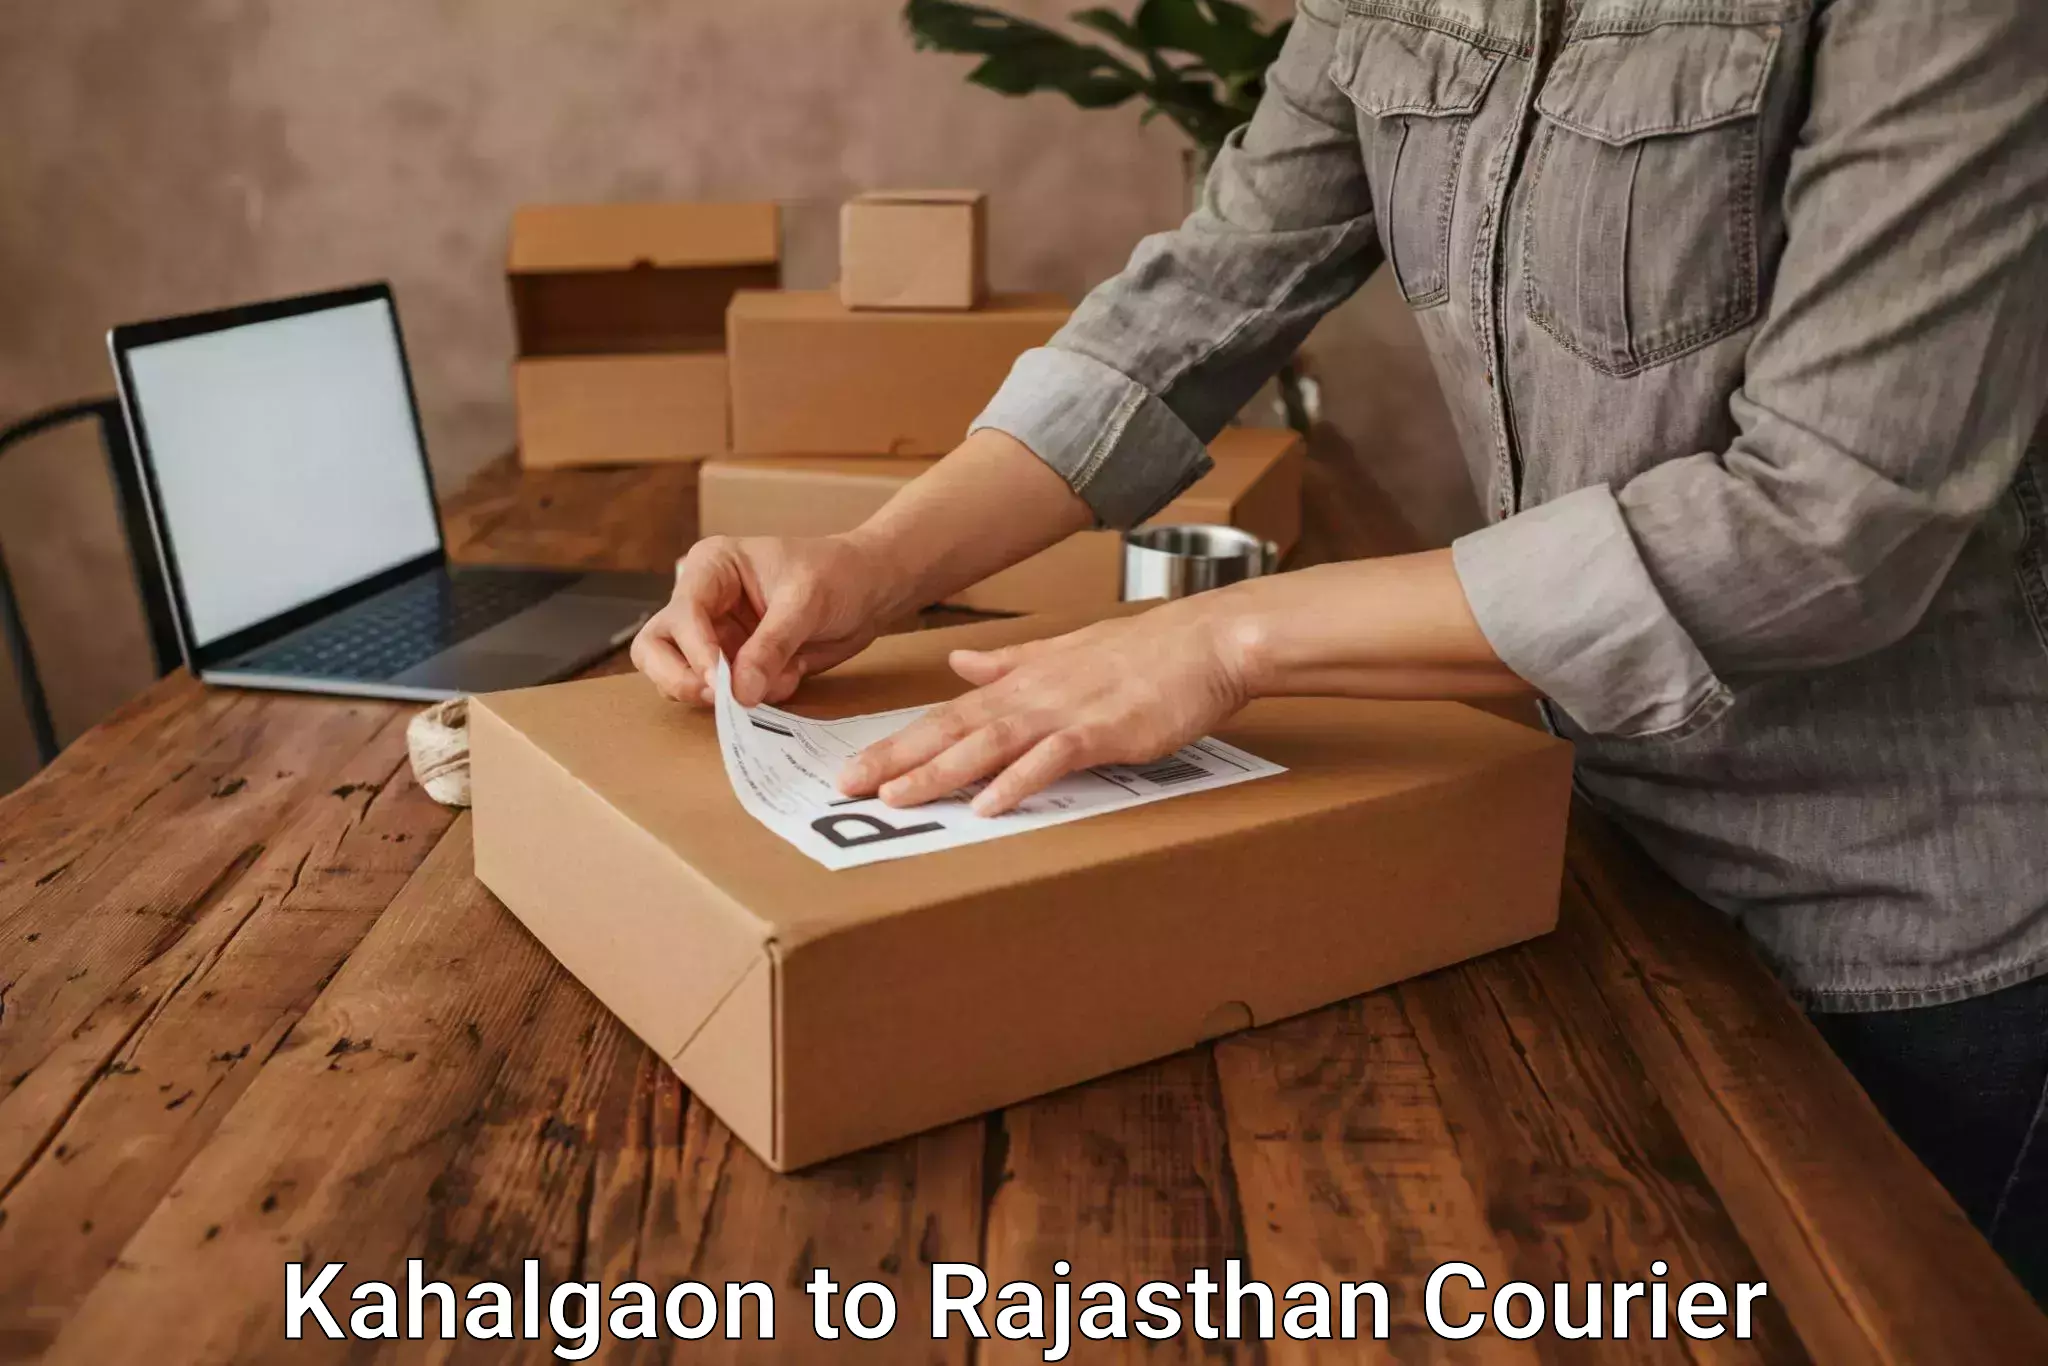 Trusted moving company Kahalgaon to Rajasthan